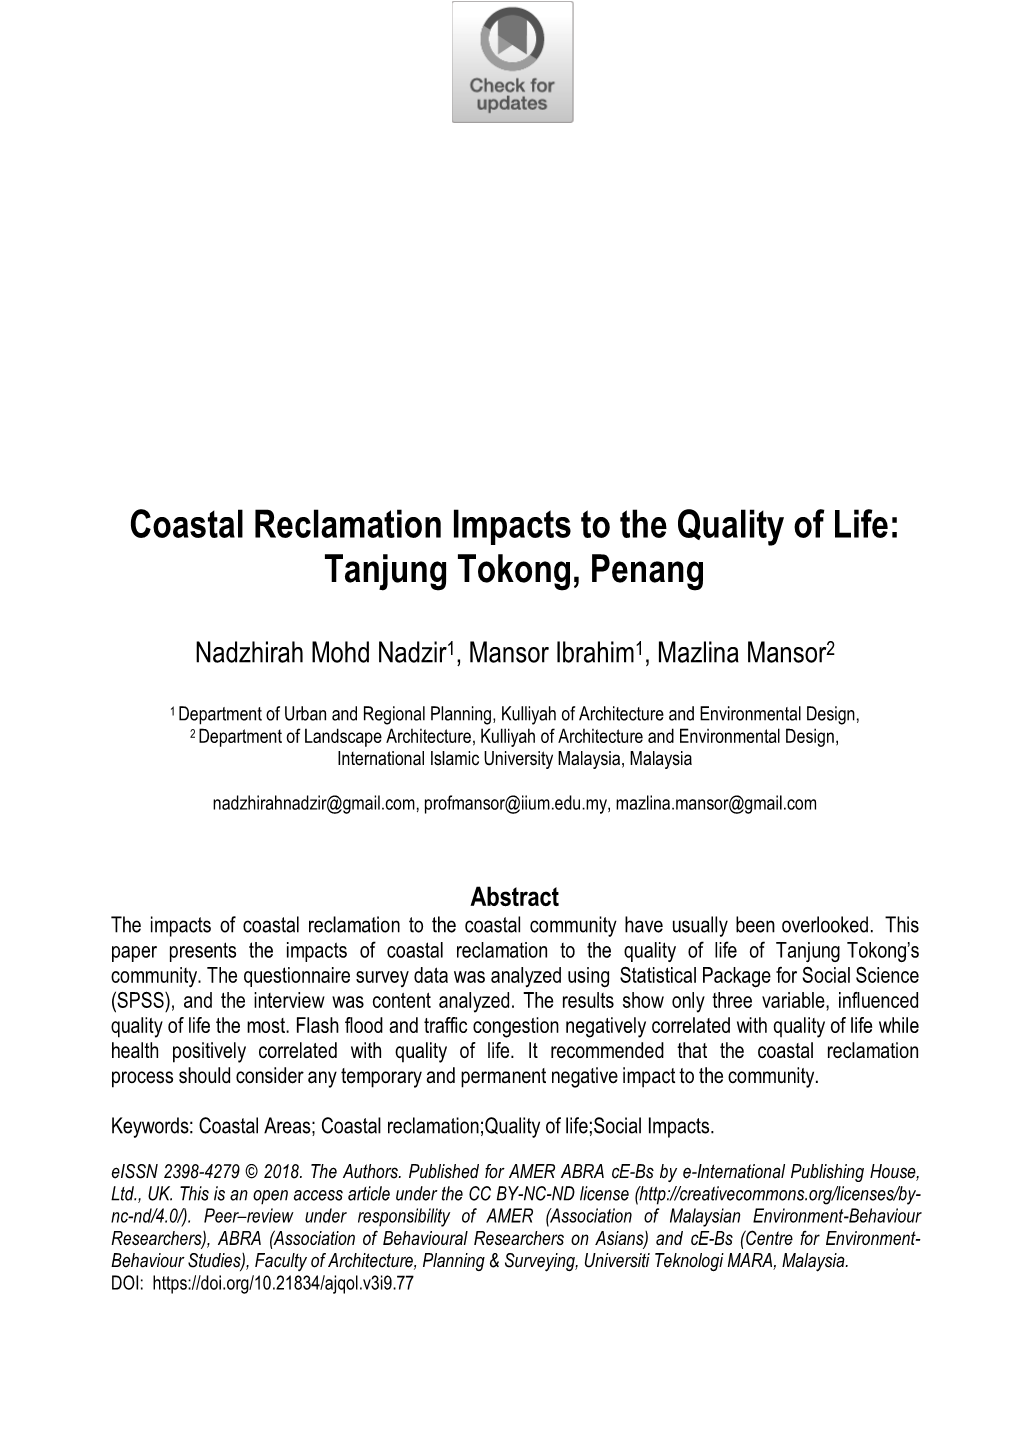 Coastal Reclamation Impacts to the Quality of Life: Tanjung Tokong, Penang